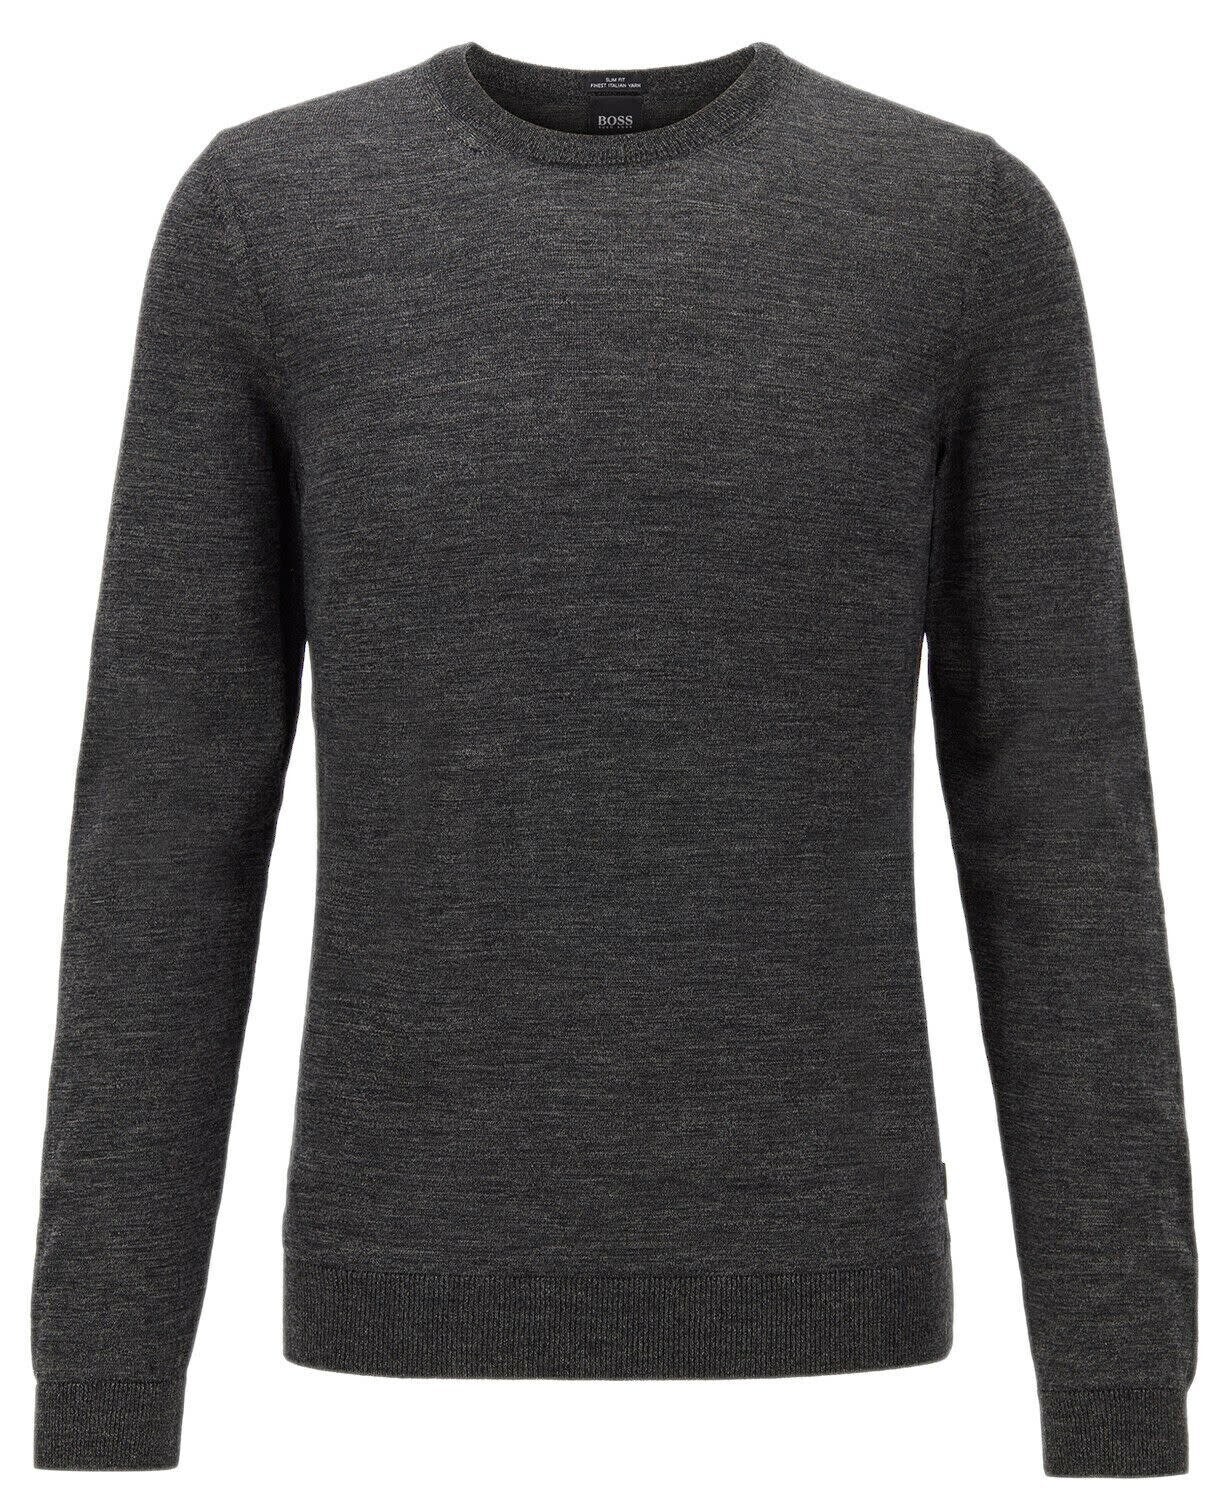 Hugo Boss Grey Merino Wool Slim Fit Sweater, Size: 2XL